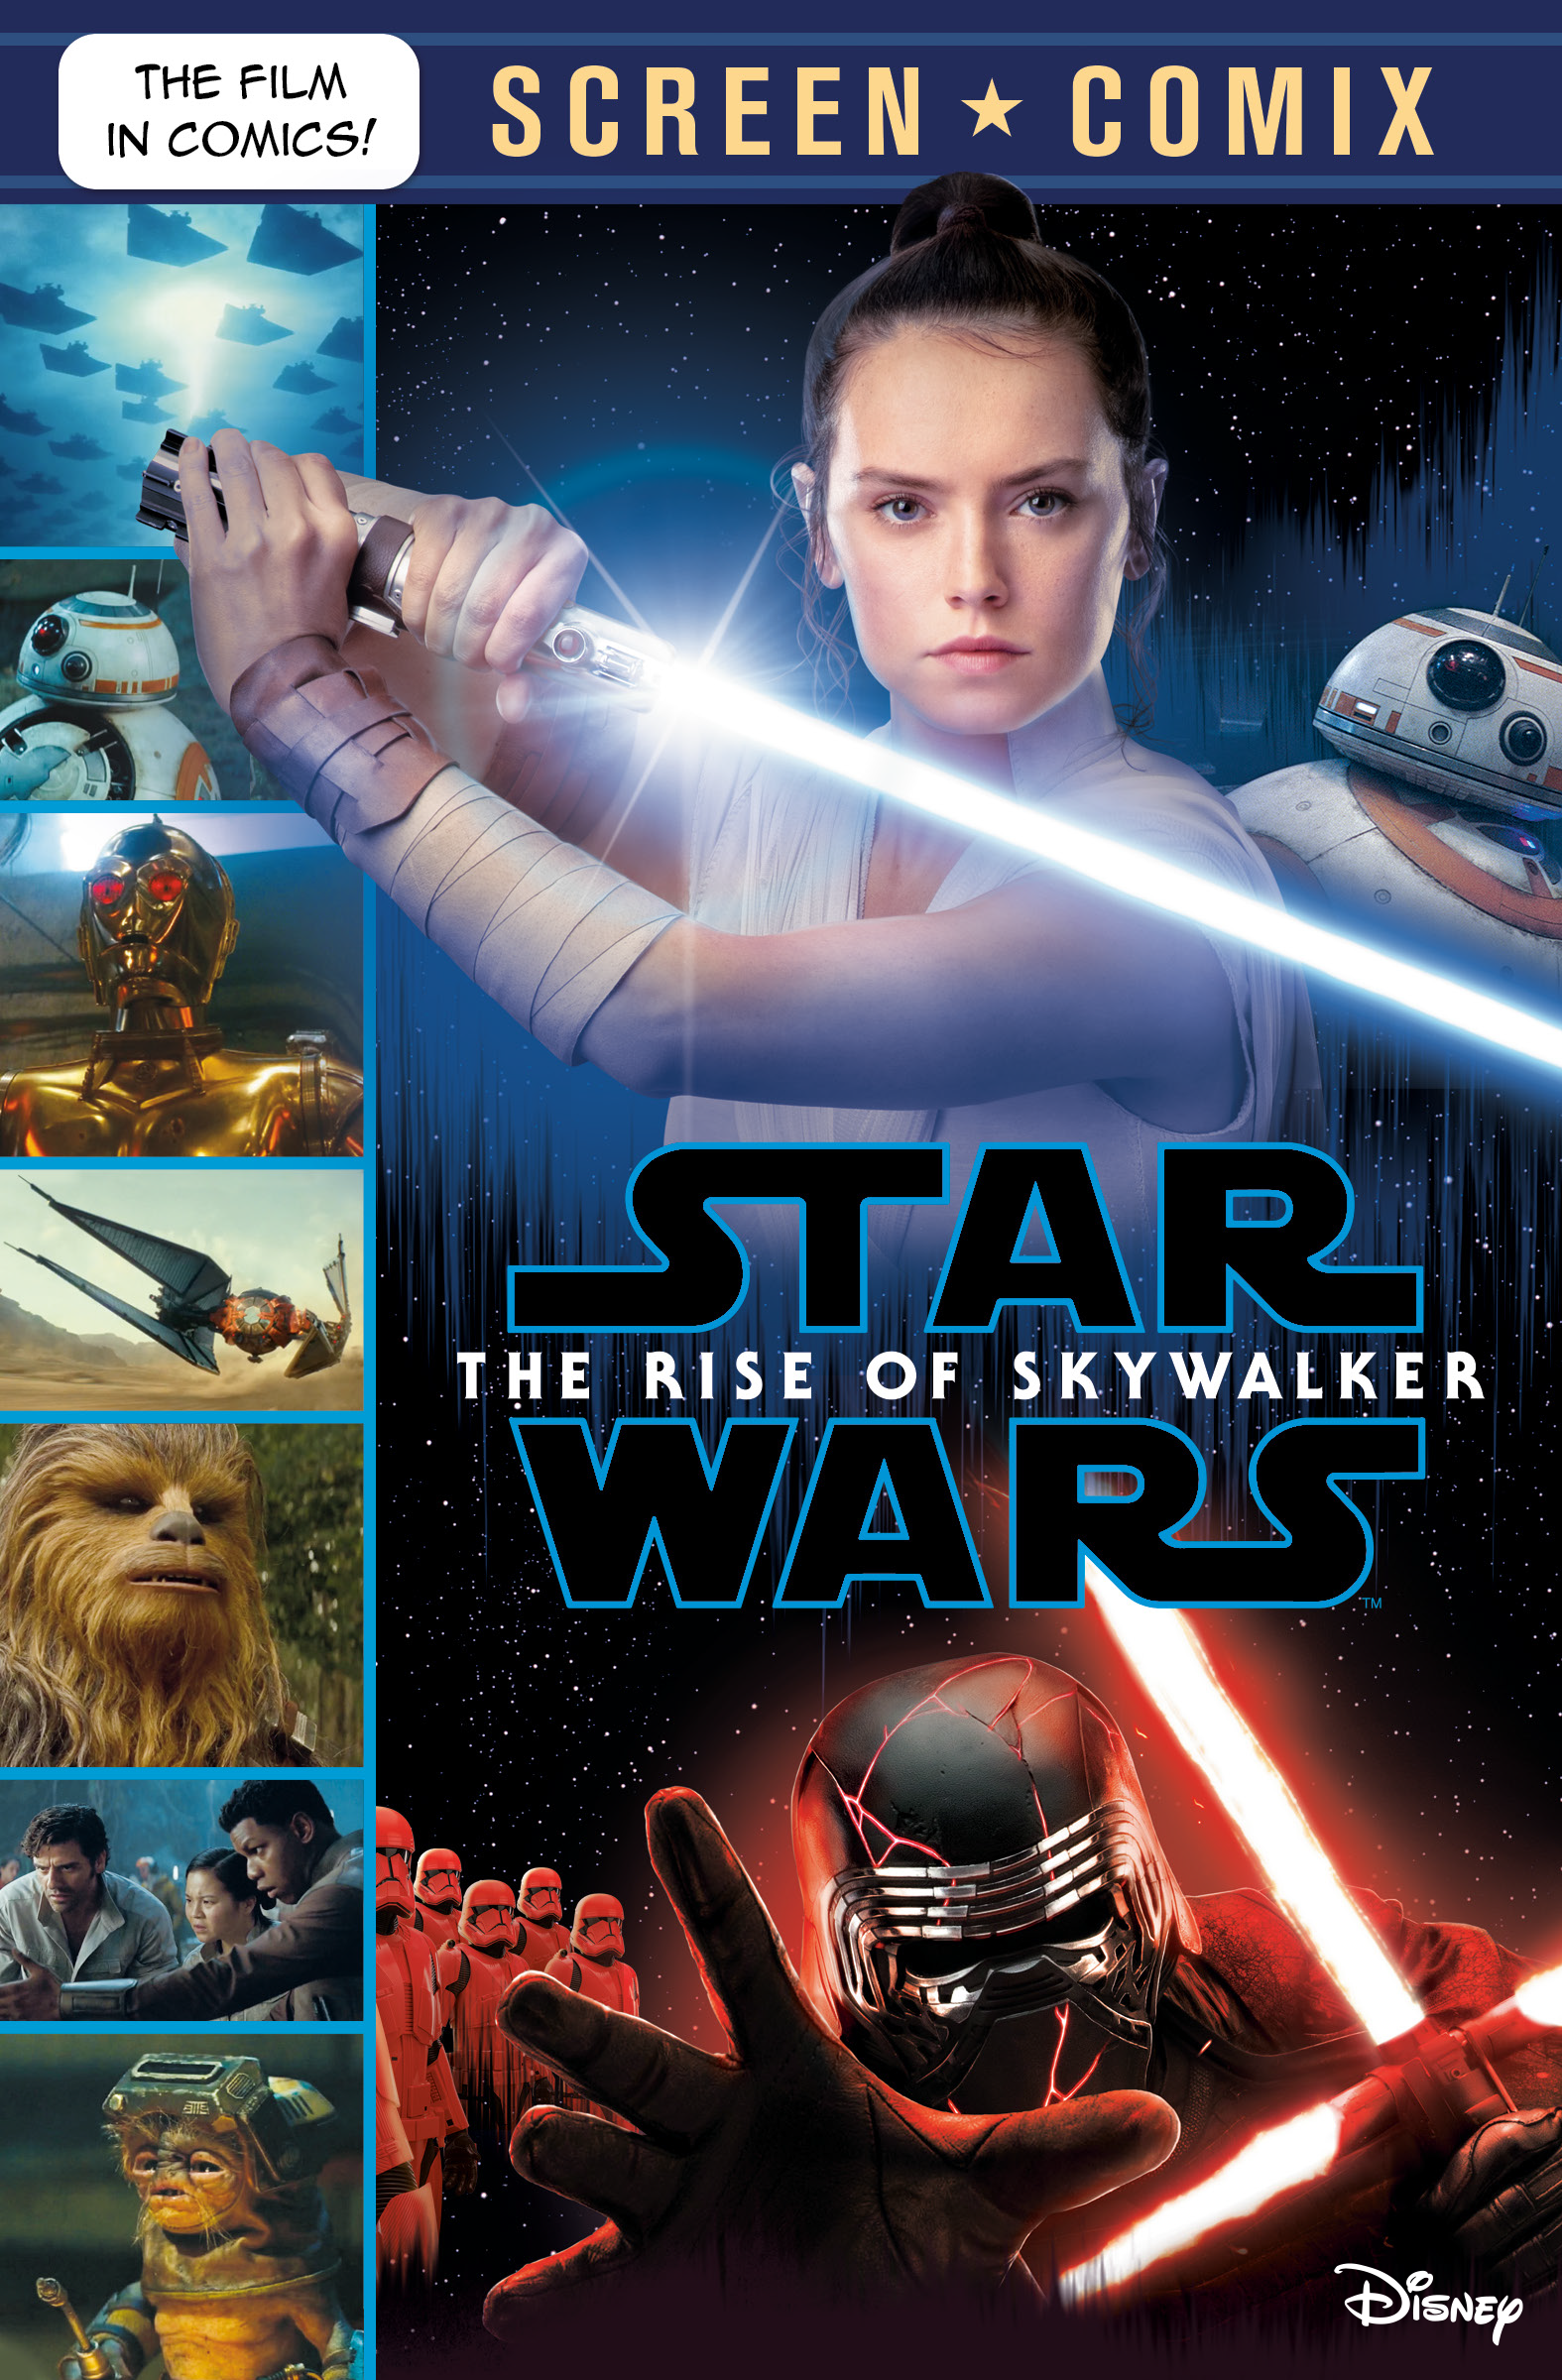 star wars the force awakens free full movie hd